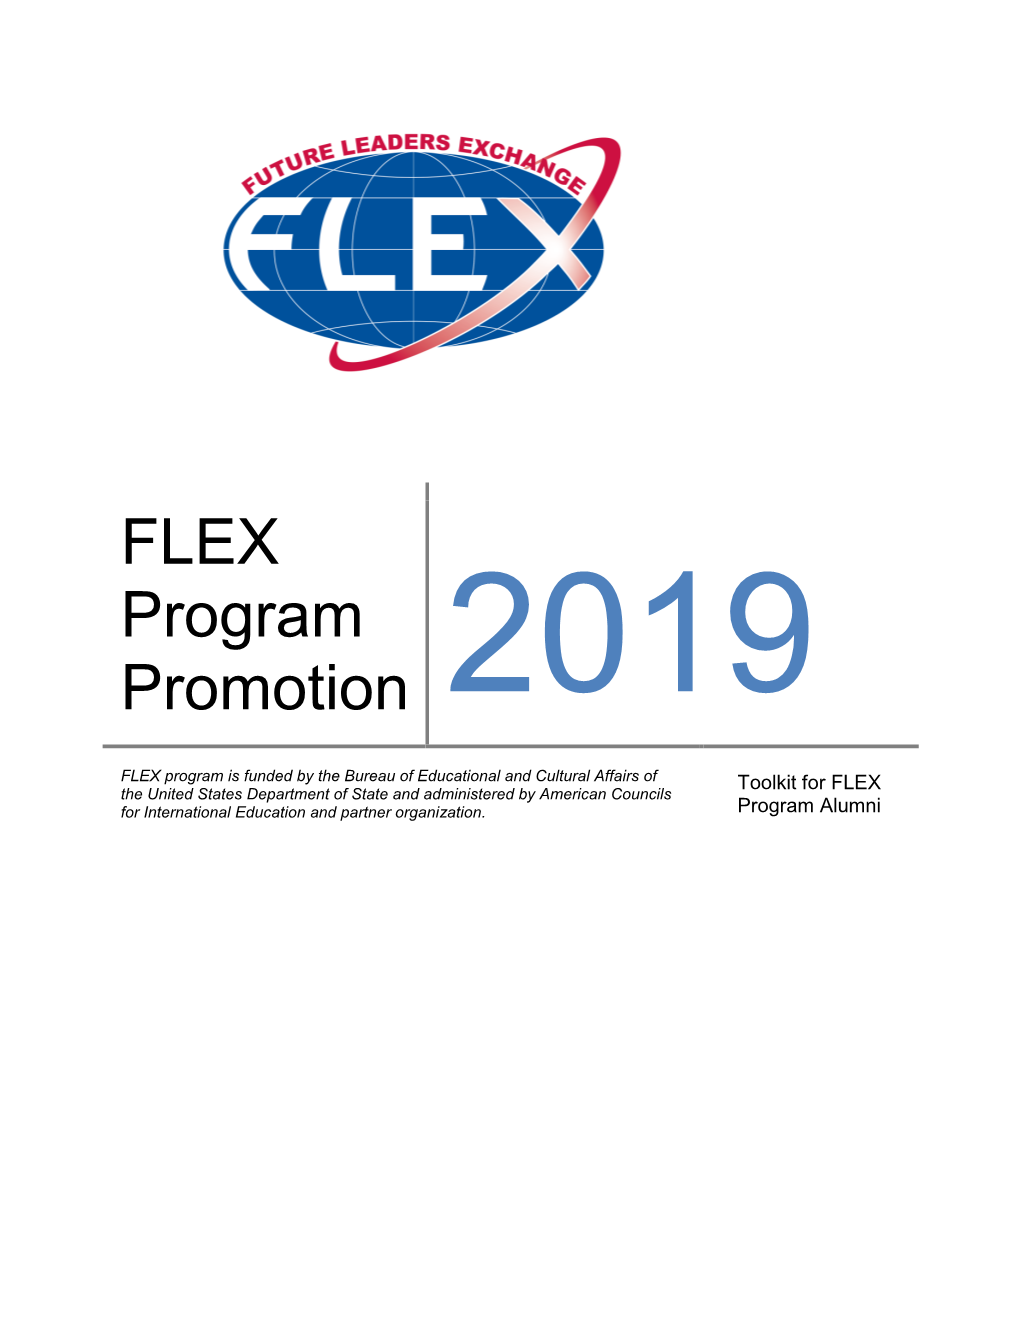 FLEX Program Promotion 2019